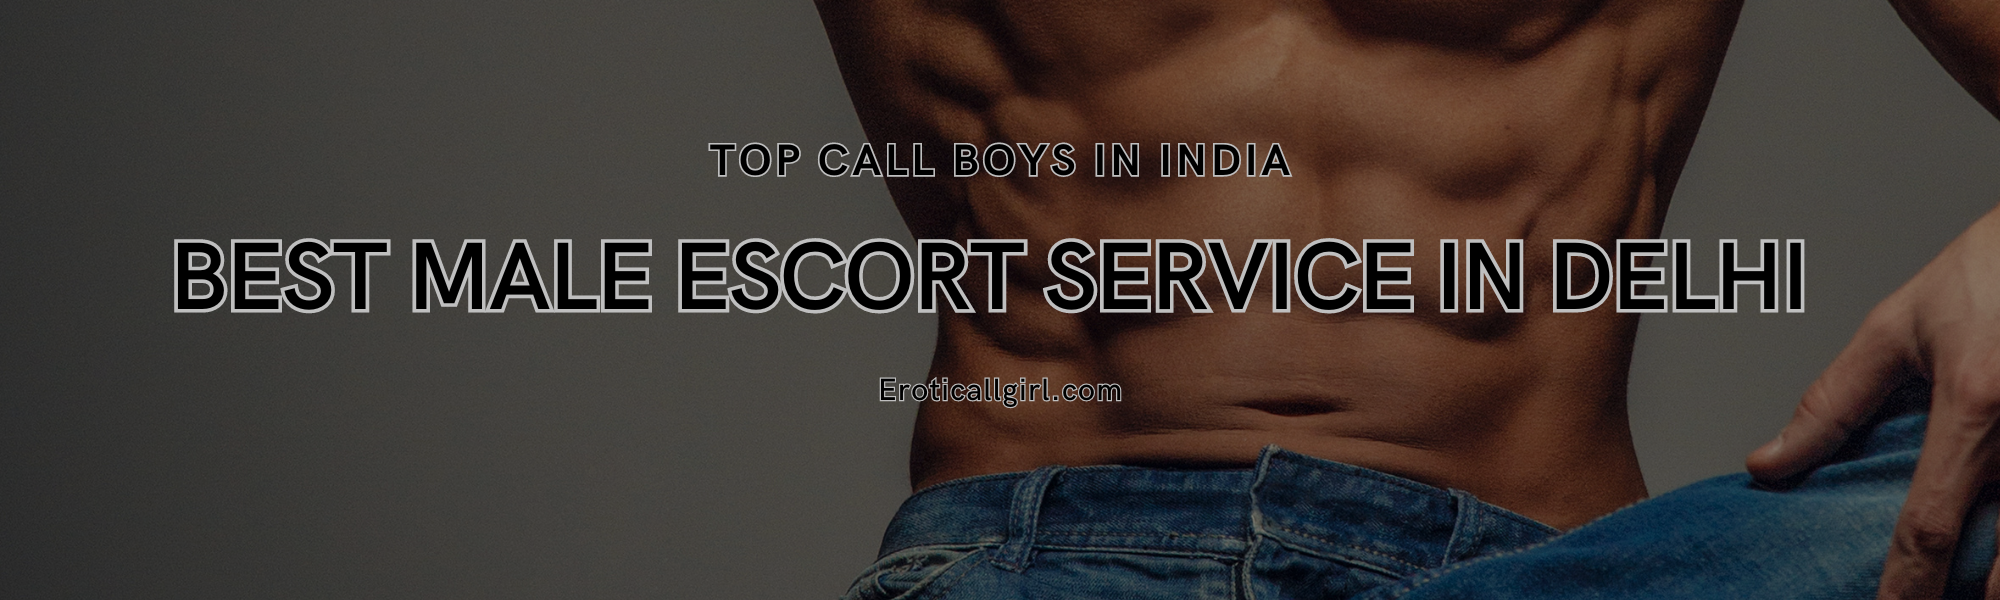 Best Male Escort Service in Delhi – Top Call Boys in India